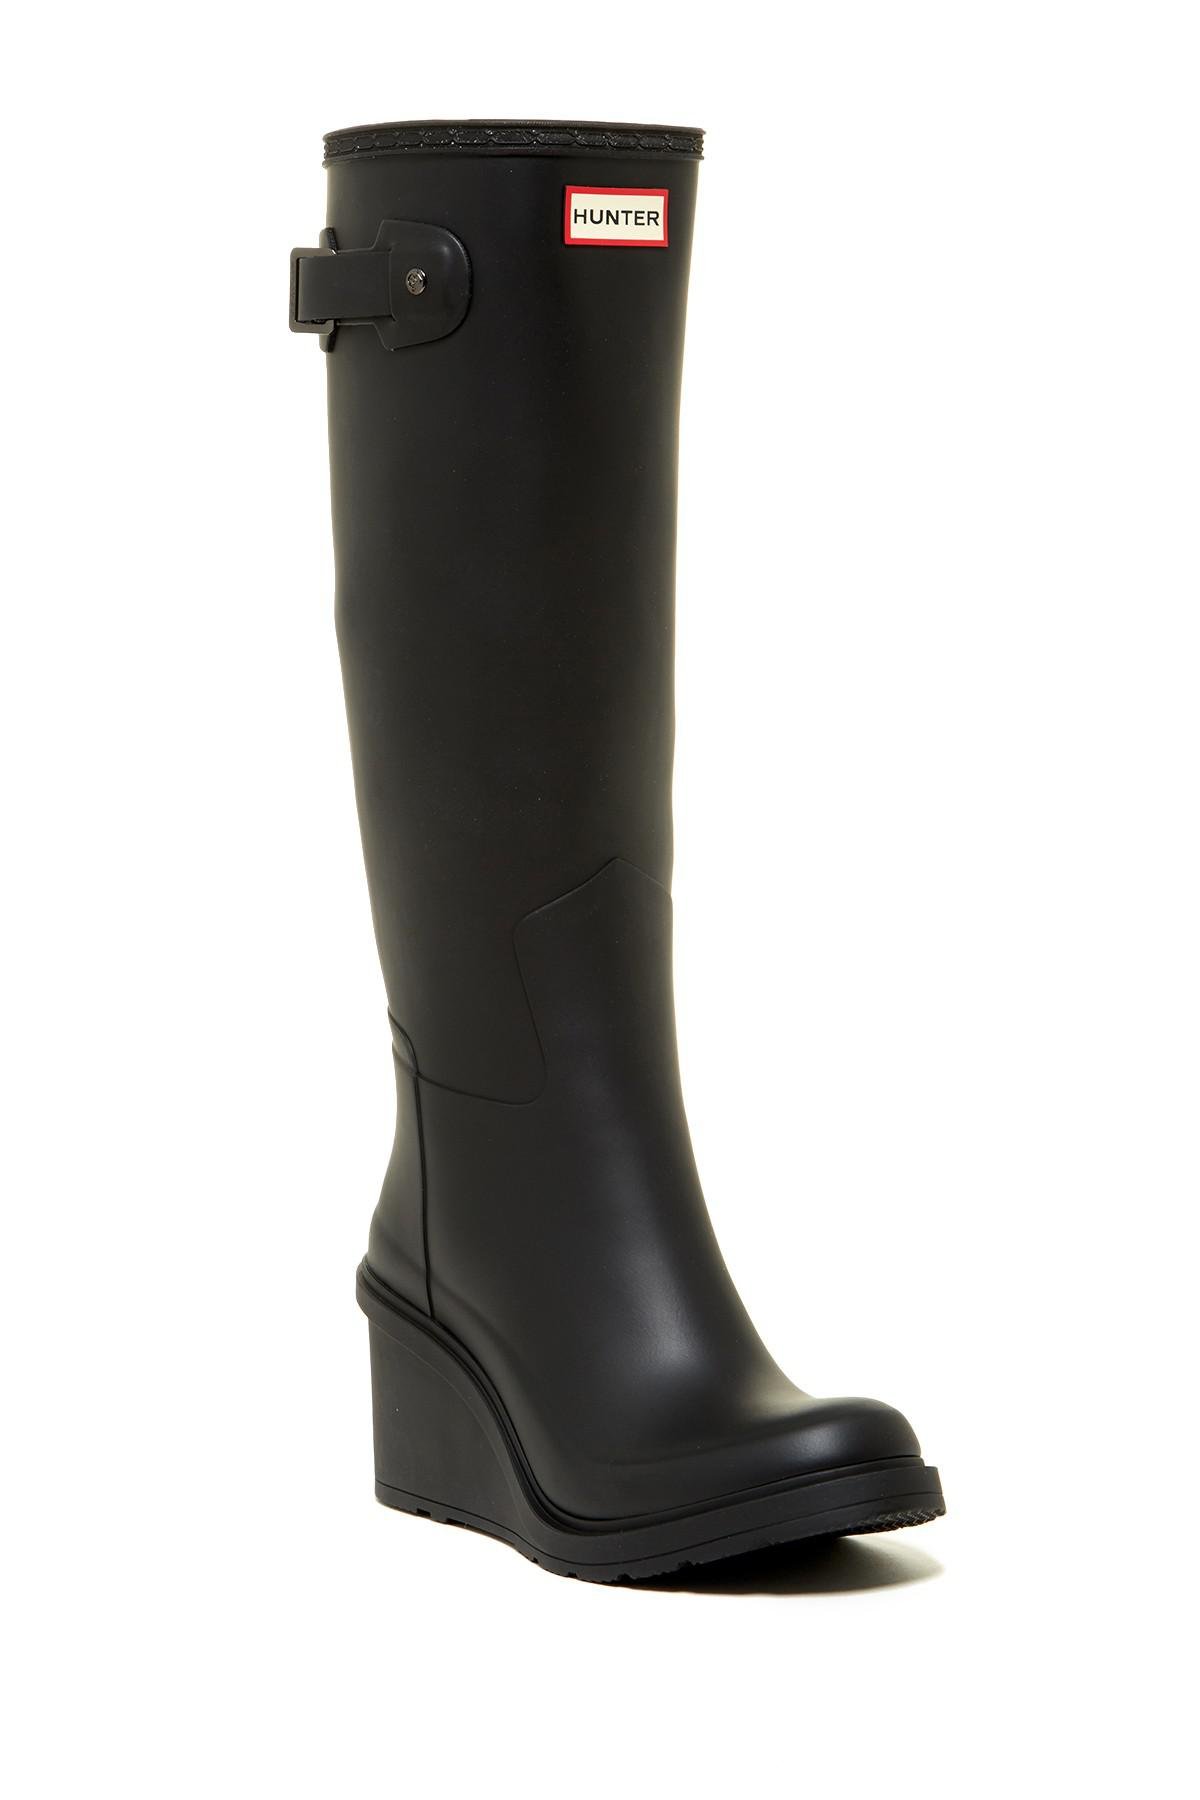 Lyst - Hunter Original Refined Wedge Rain Boot (women) in Black